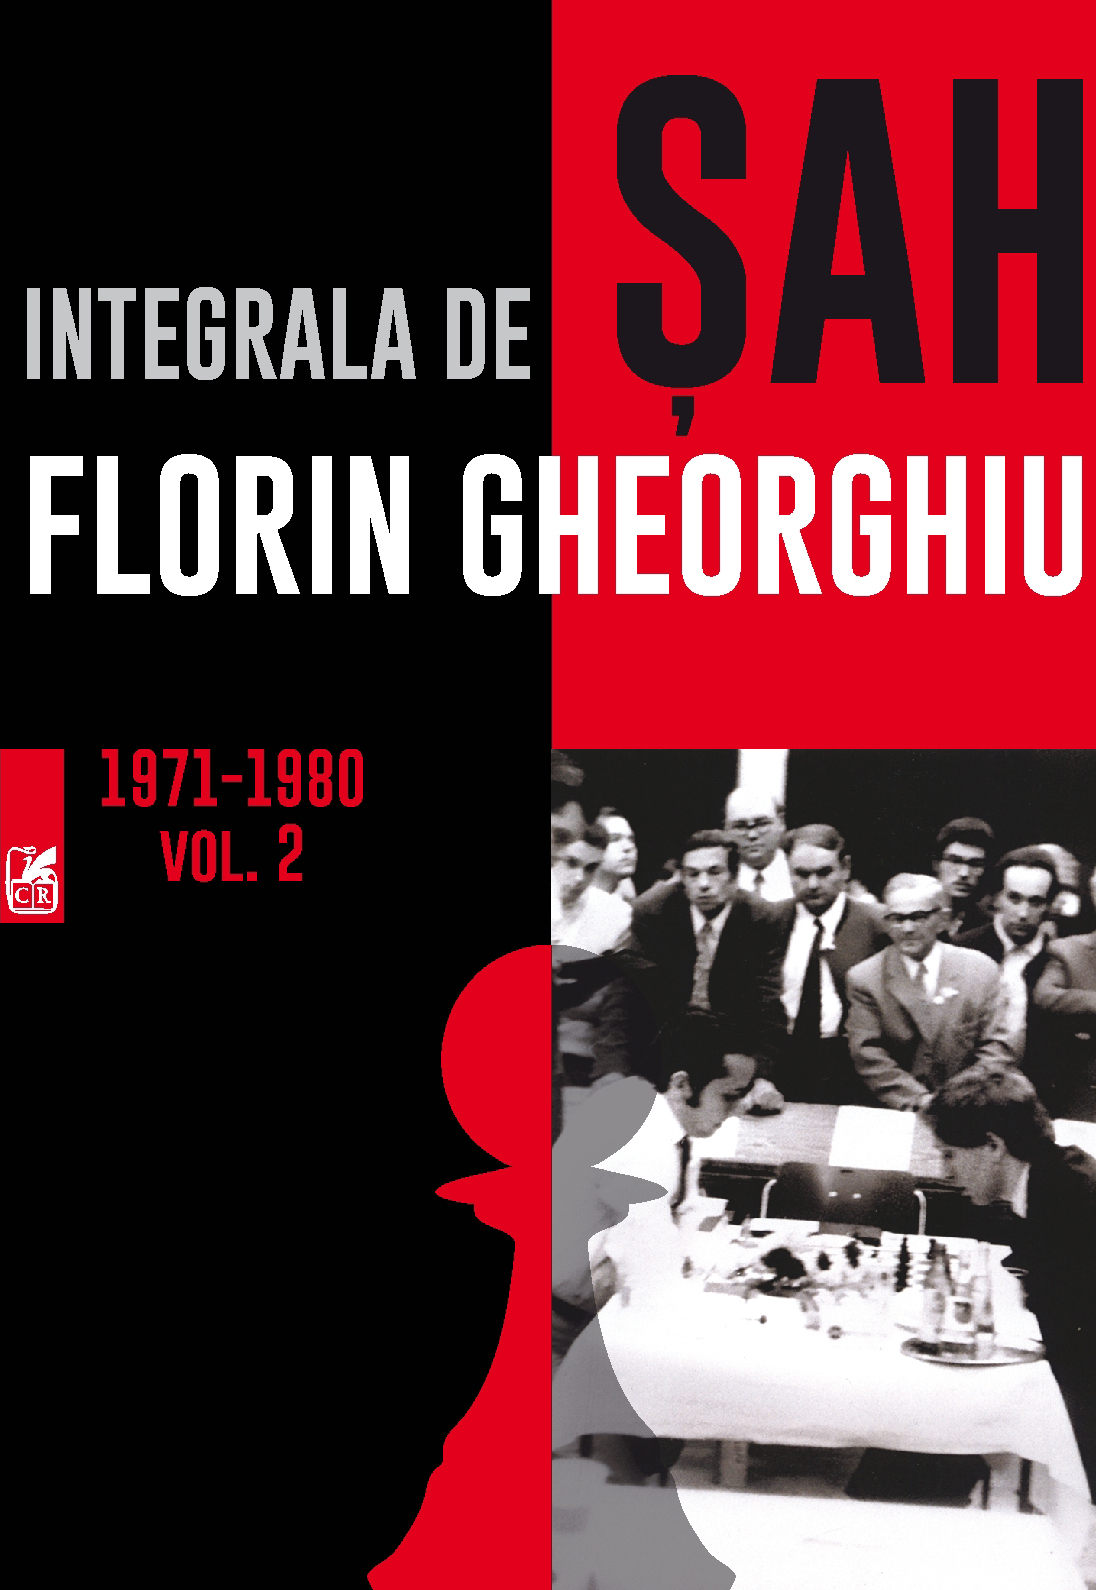 Integrala de sah vol. 2 1971-1980 - Florin Gheorghiu 